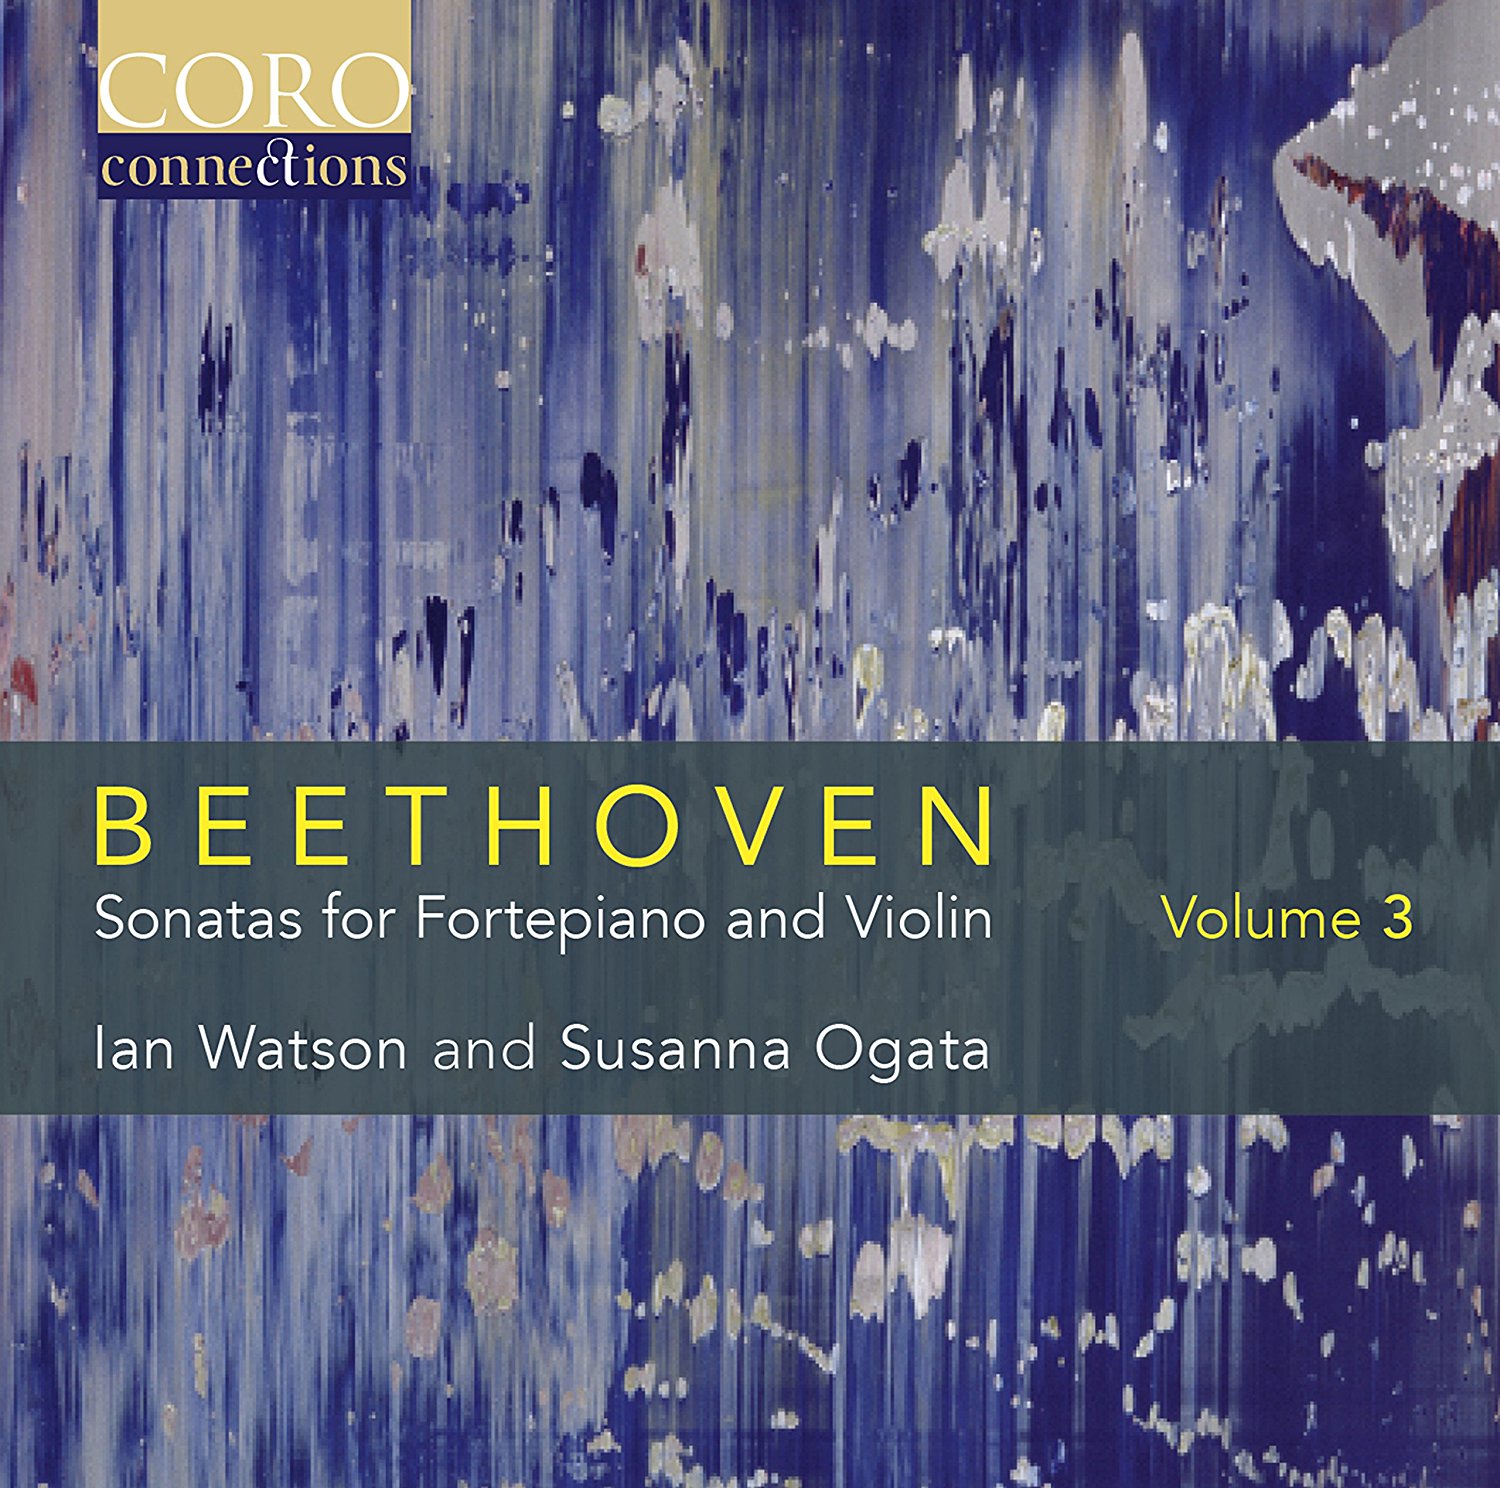 Ian Watson & Susanna Ogata - Beethoven: Sonatas for Fortepiano and Violin, Vol. 3 (2017) [Qobuz FLAC 24bit/96kHz]